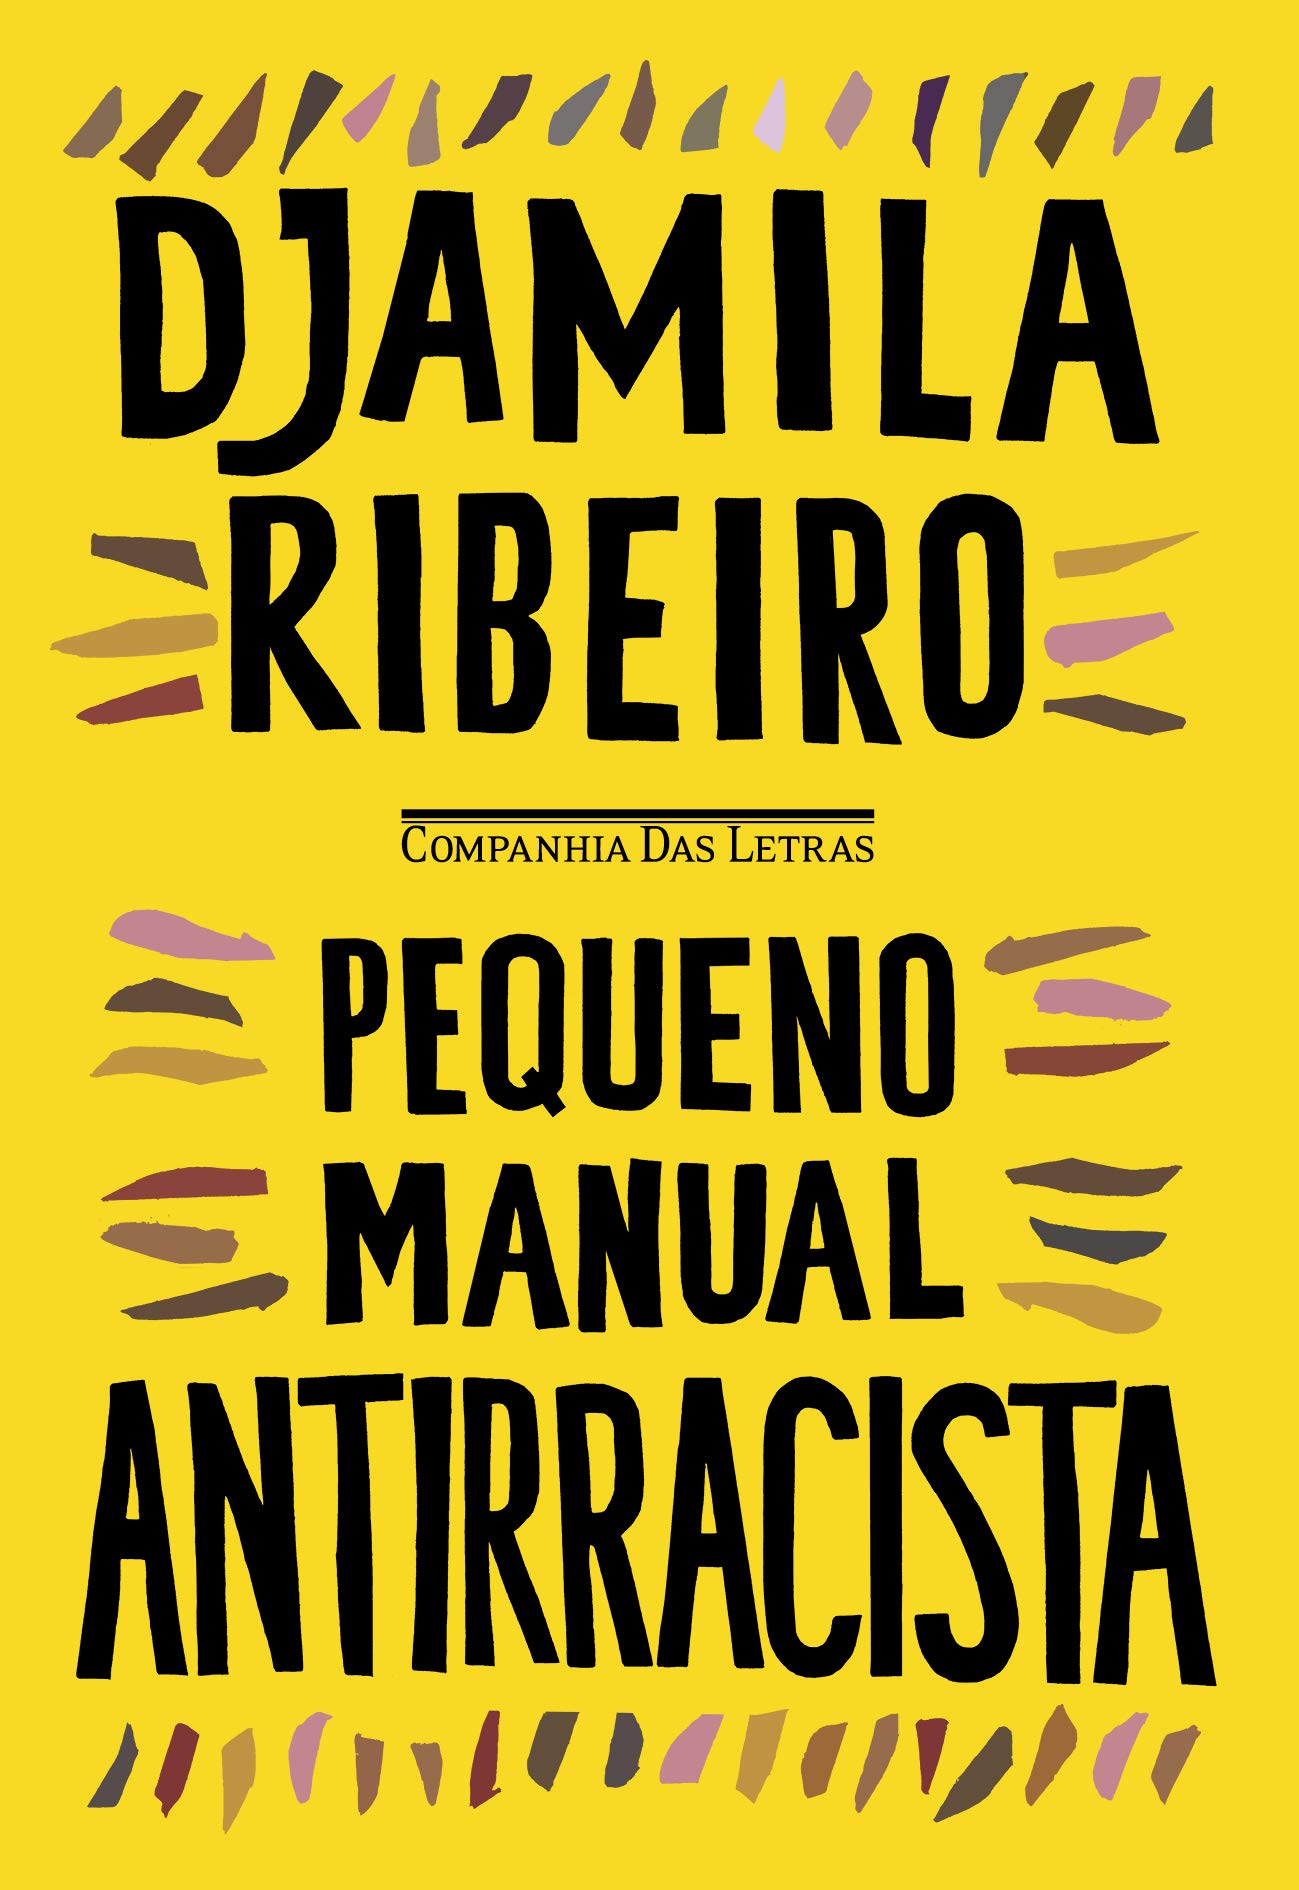 "Pequeno Manual Antirracista", de Djamila Ribeiro